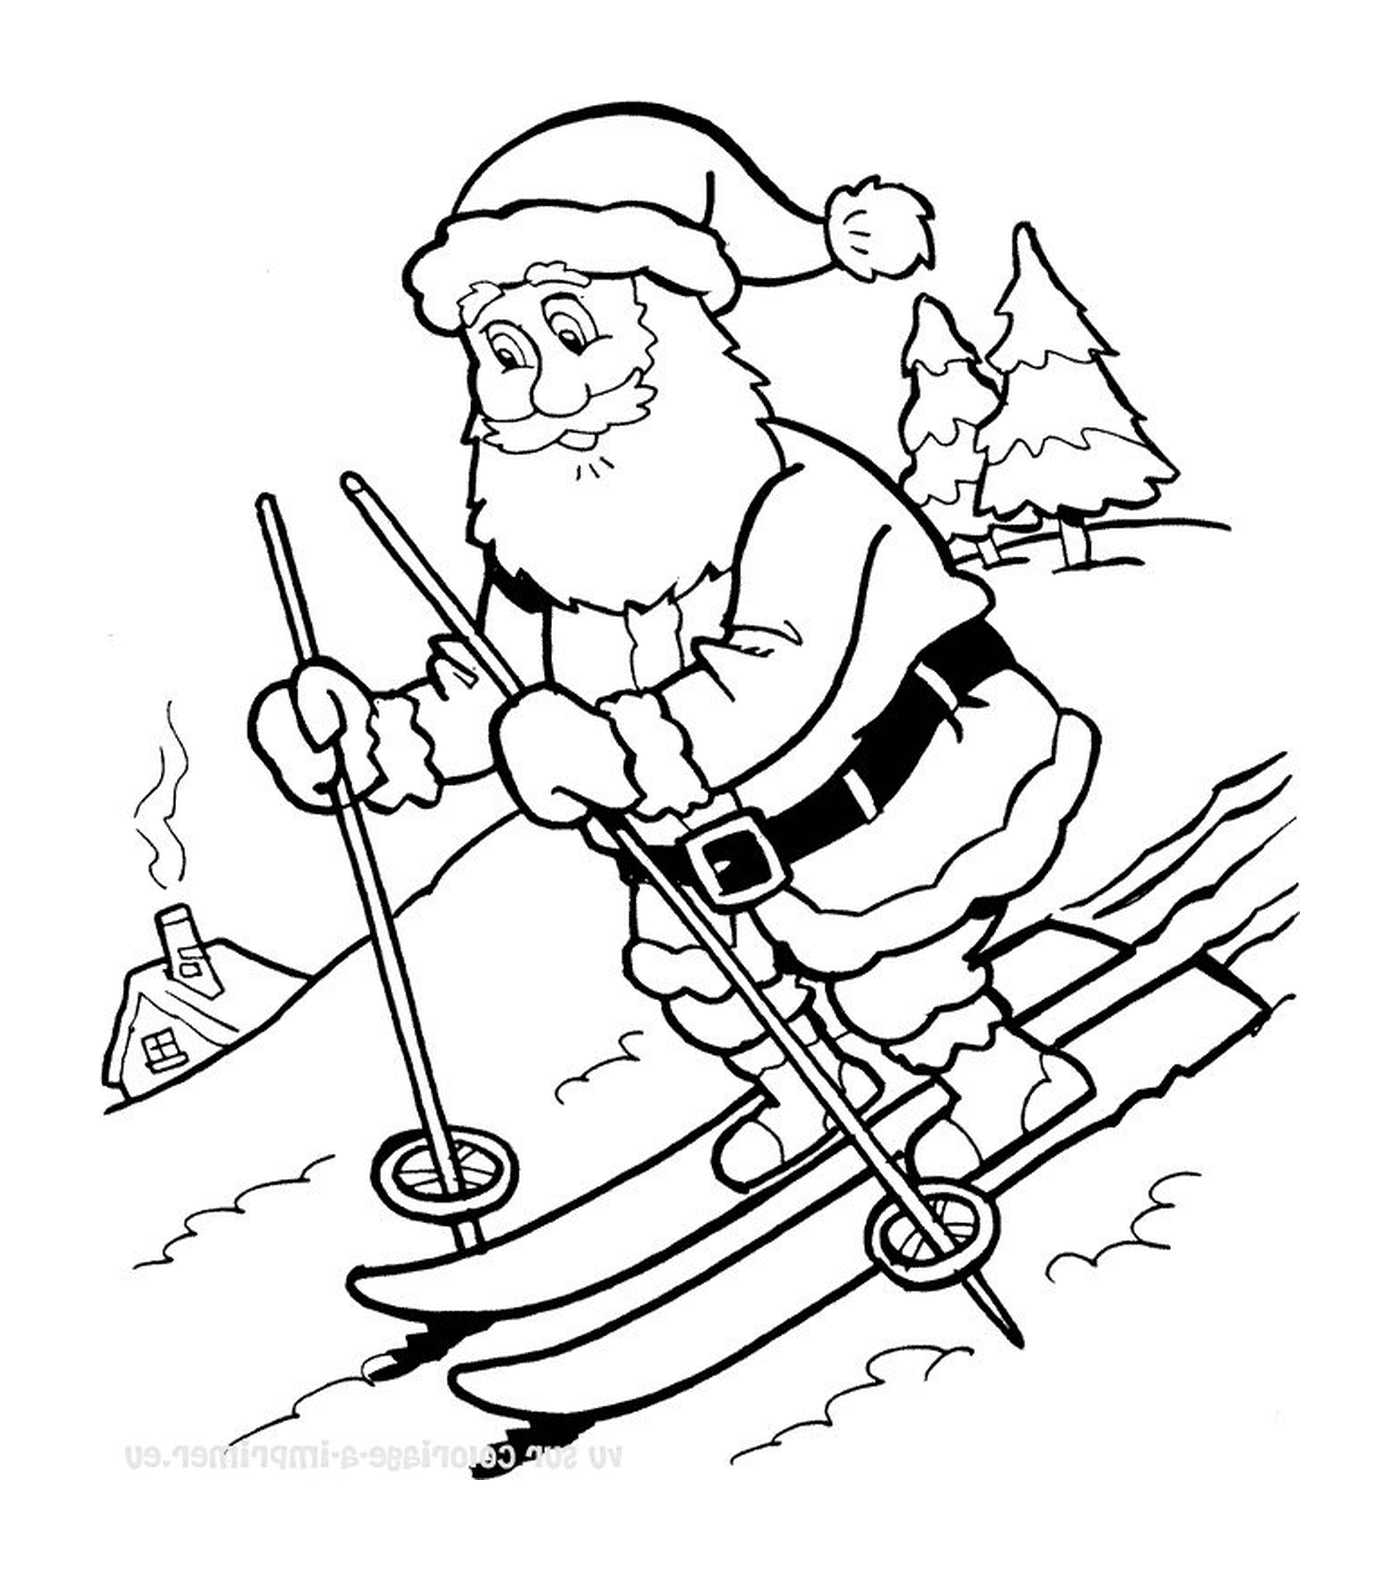  Санта катается на лыжах 